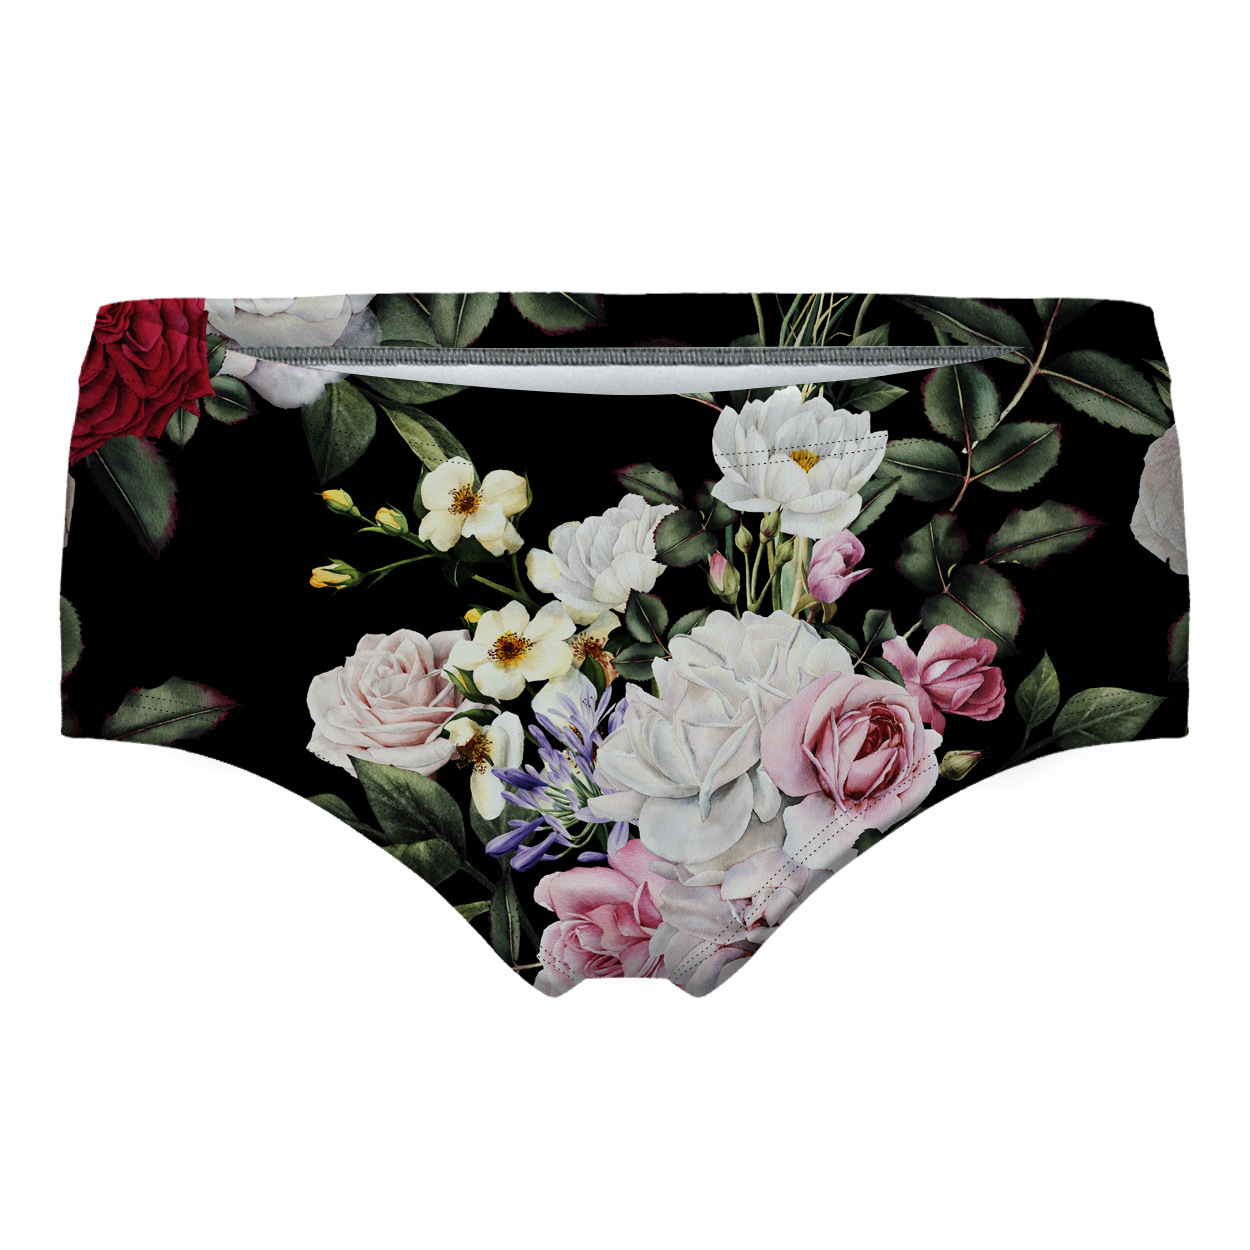 custom print womens girl lady briefs panties knickers underwear face personalized logo